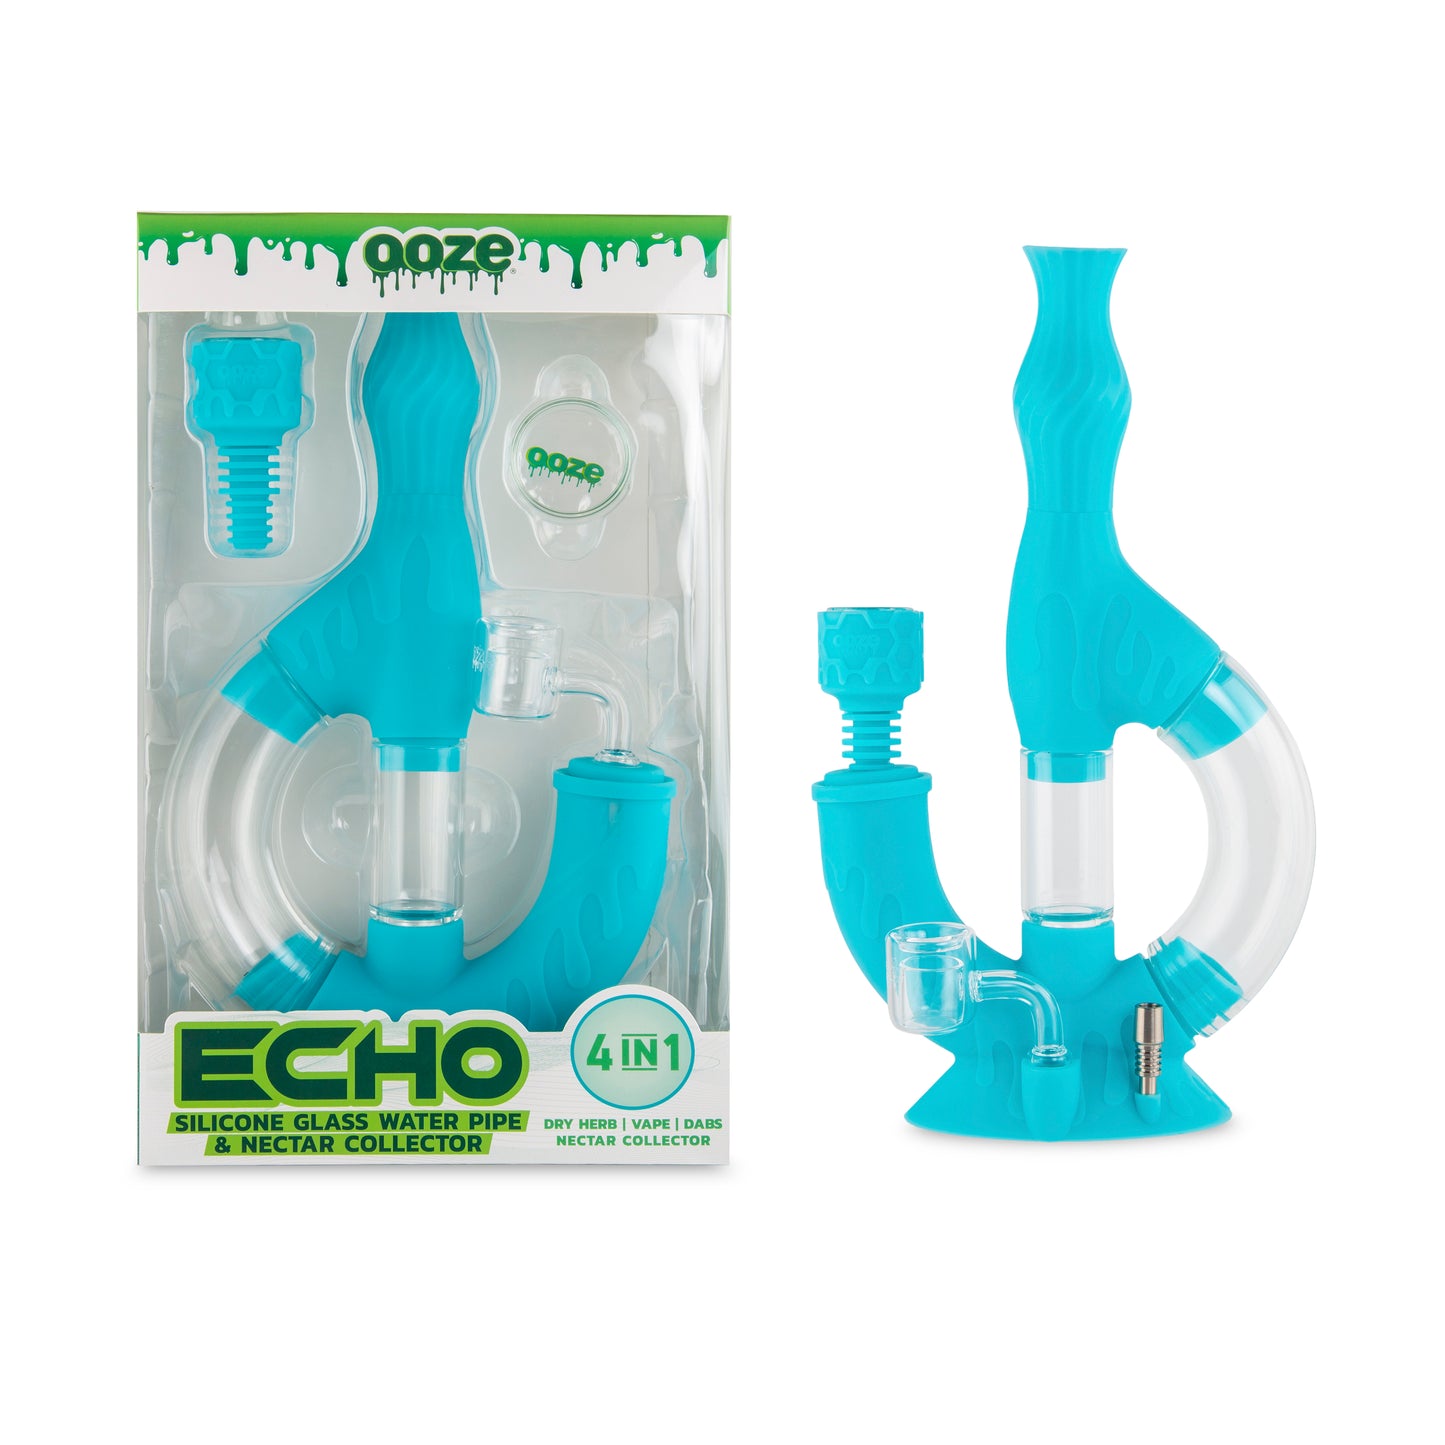 Ooze Echo Silicone Water Pipe, Dab Rig & Dab Straw - Aqua Teal